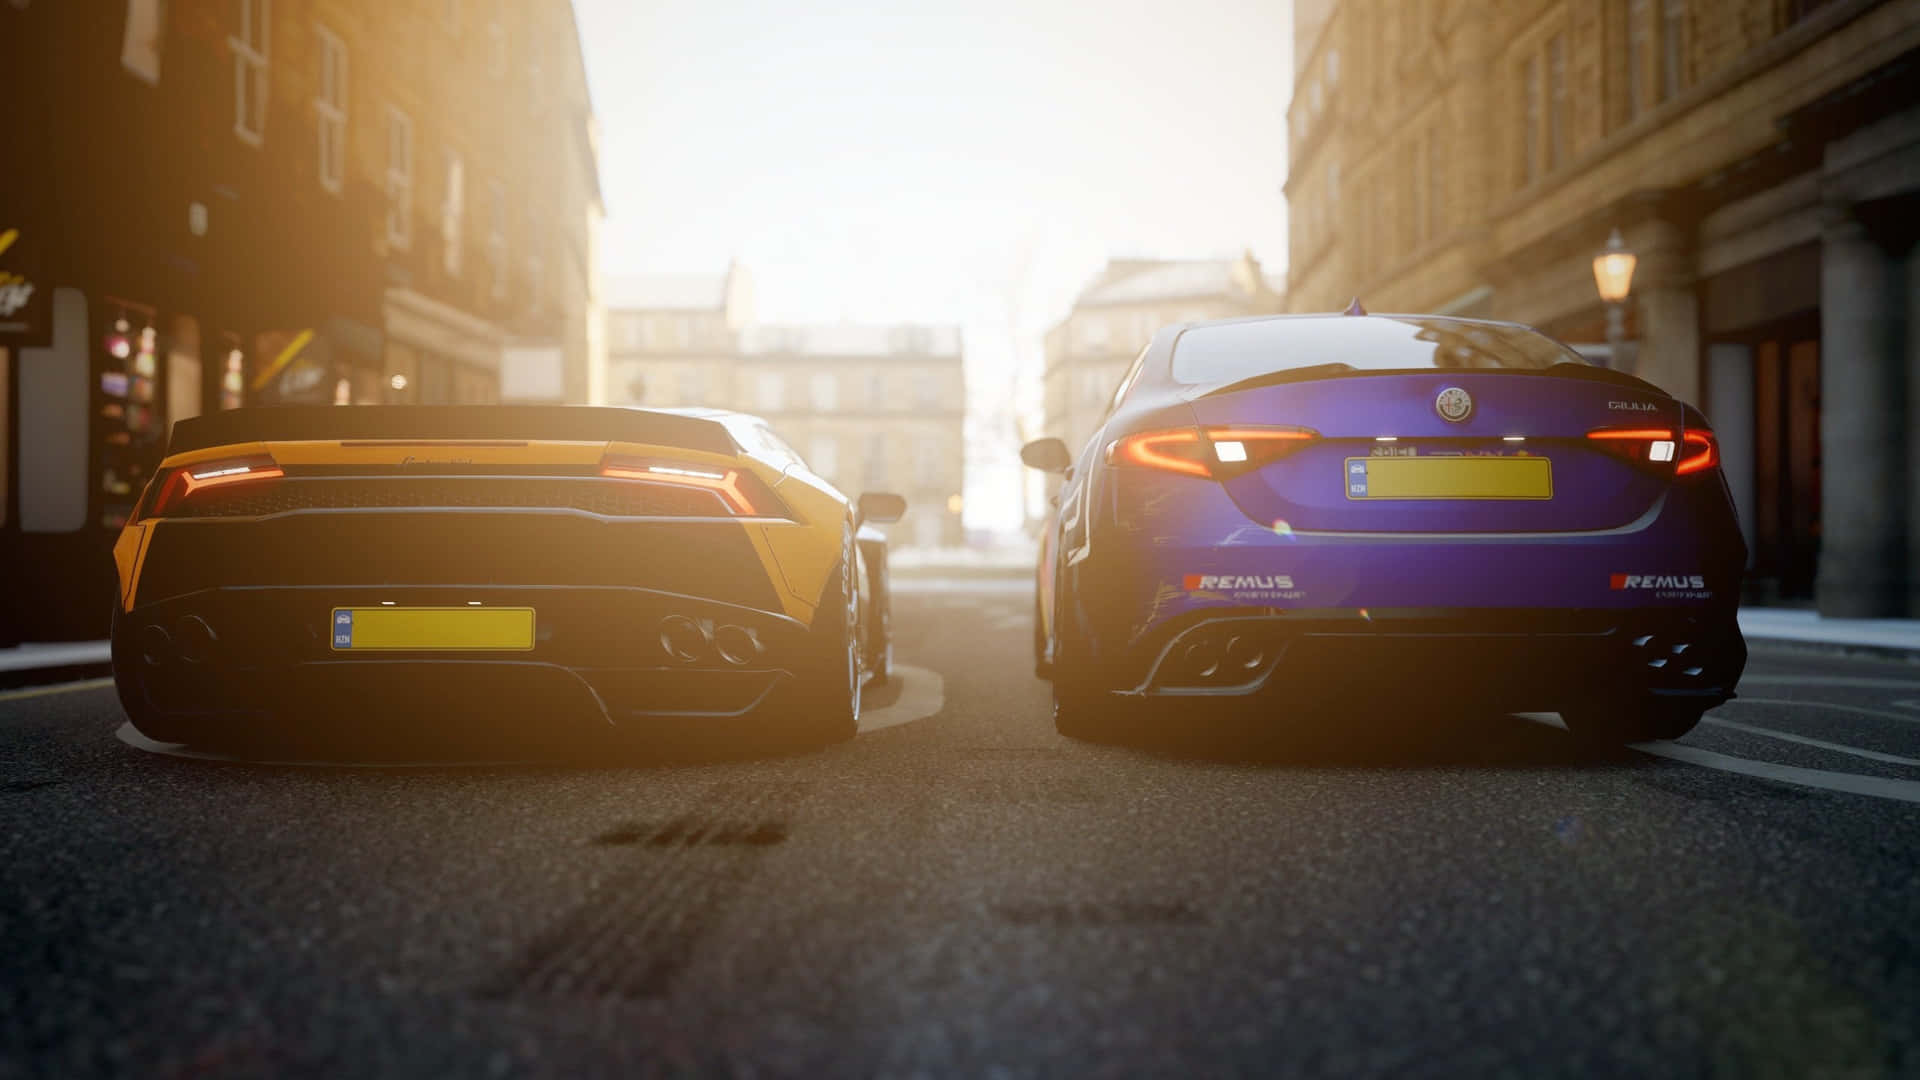 1440p Lamborghini And Alfa Romeo Cars Picture